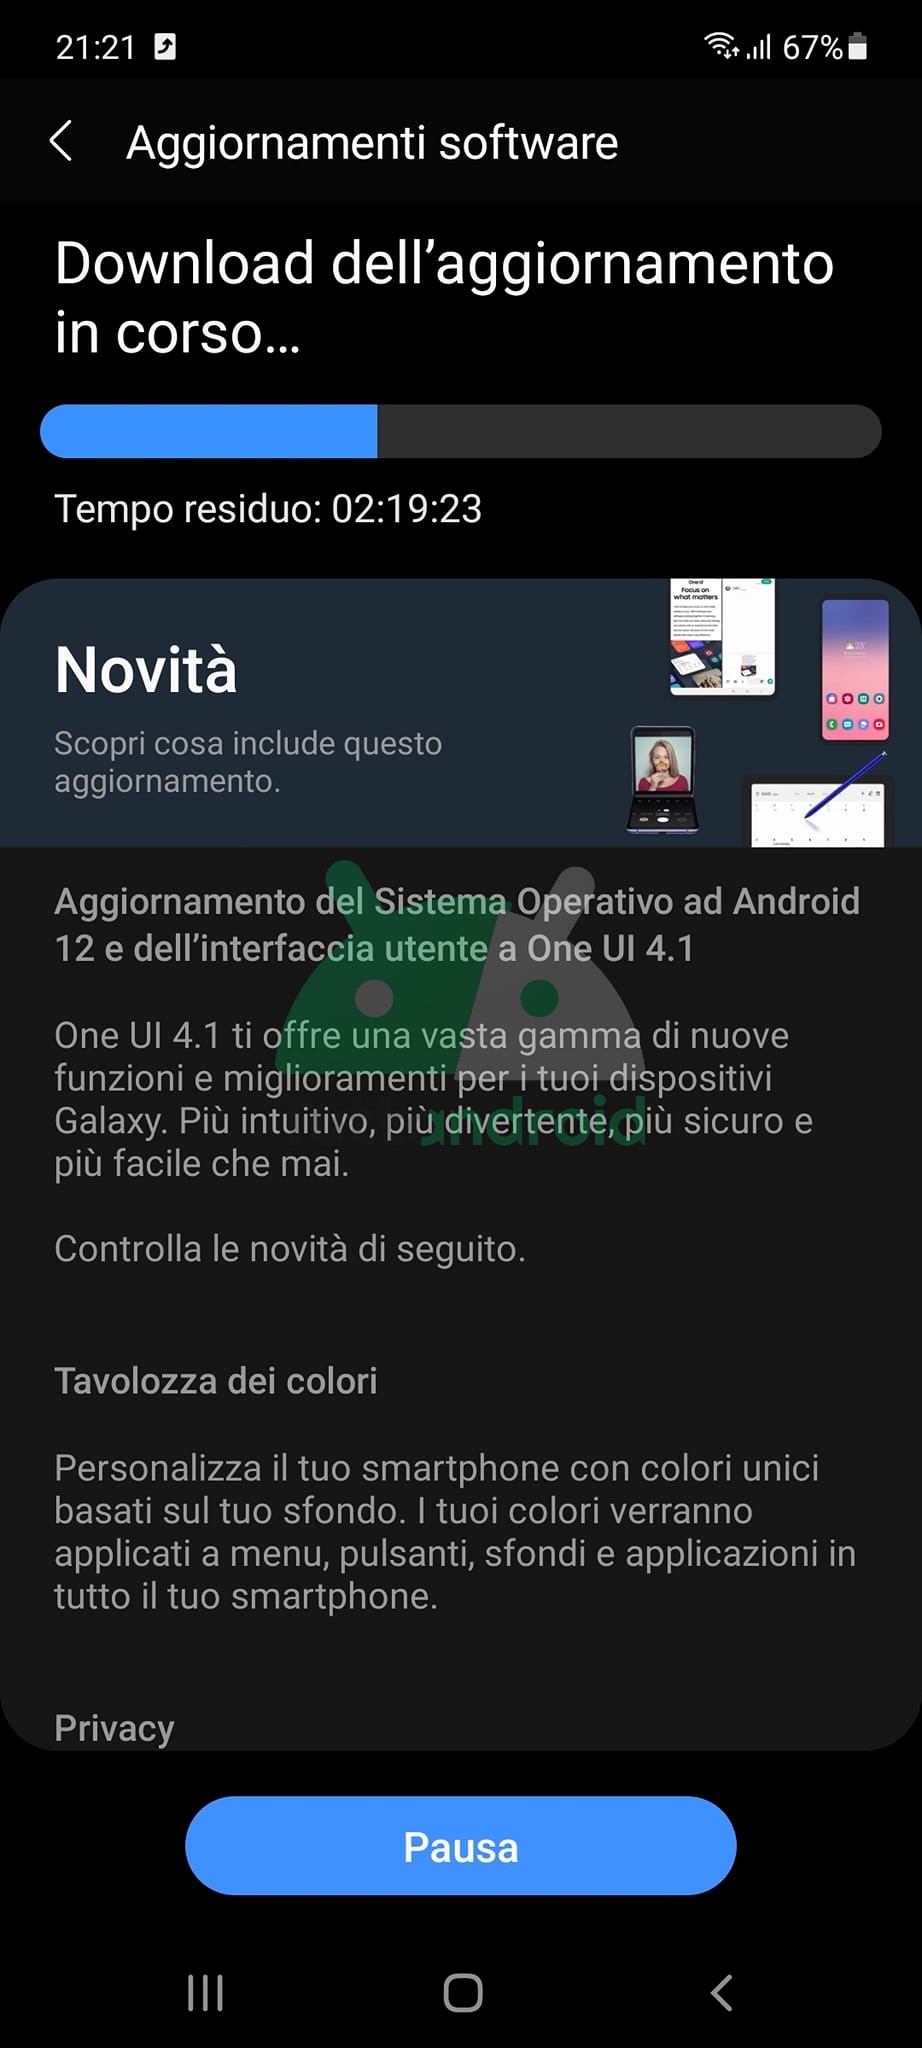 سامسونج Galaxy A71 تحديث Android 12 و One UI 4.1